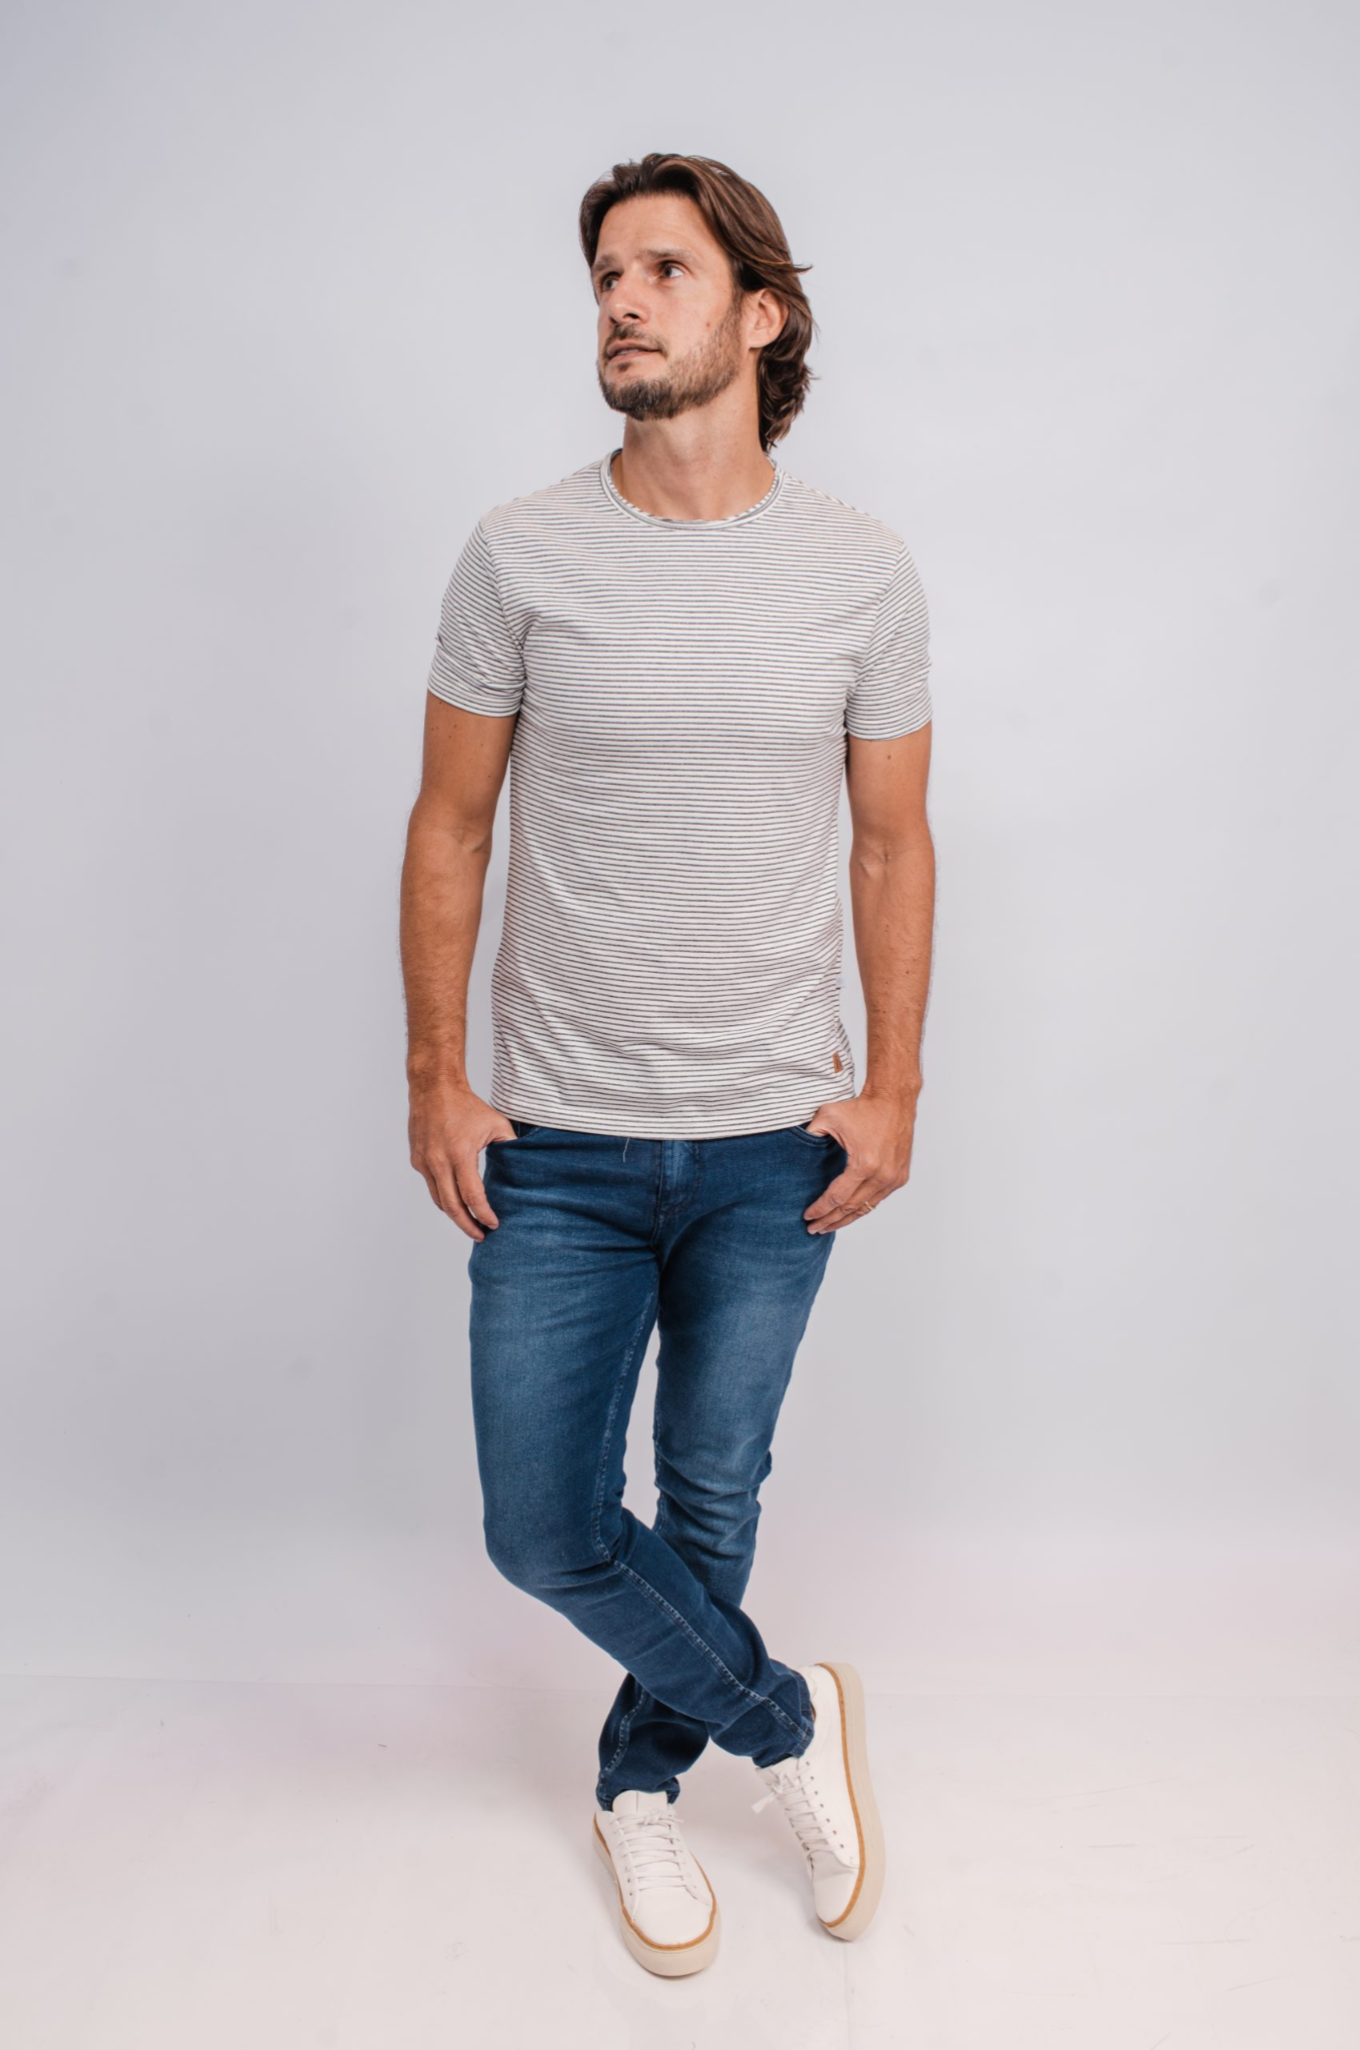 Camiseta Listrada Cinza - Ciao for Men